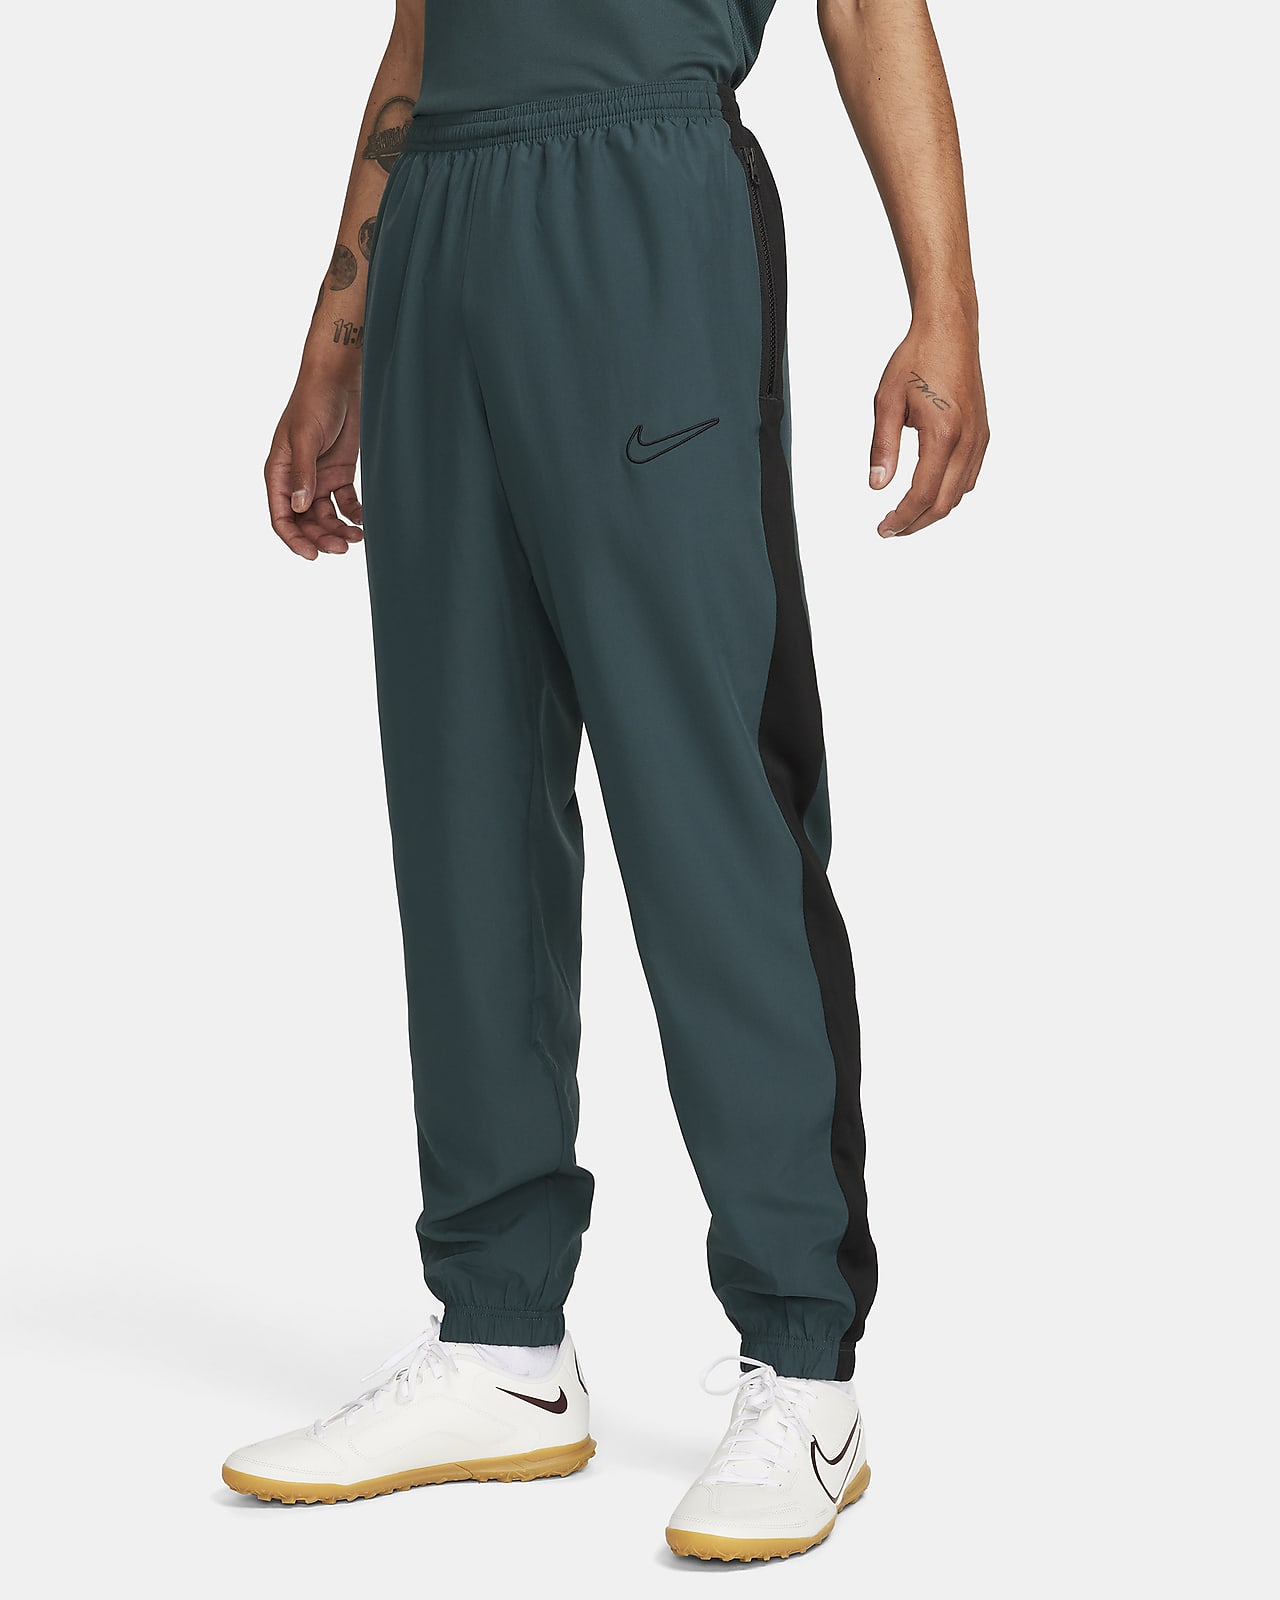 Nike Dri-FIT Showtime Men's Basketball Pants.